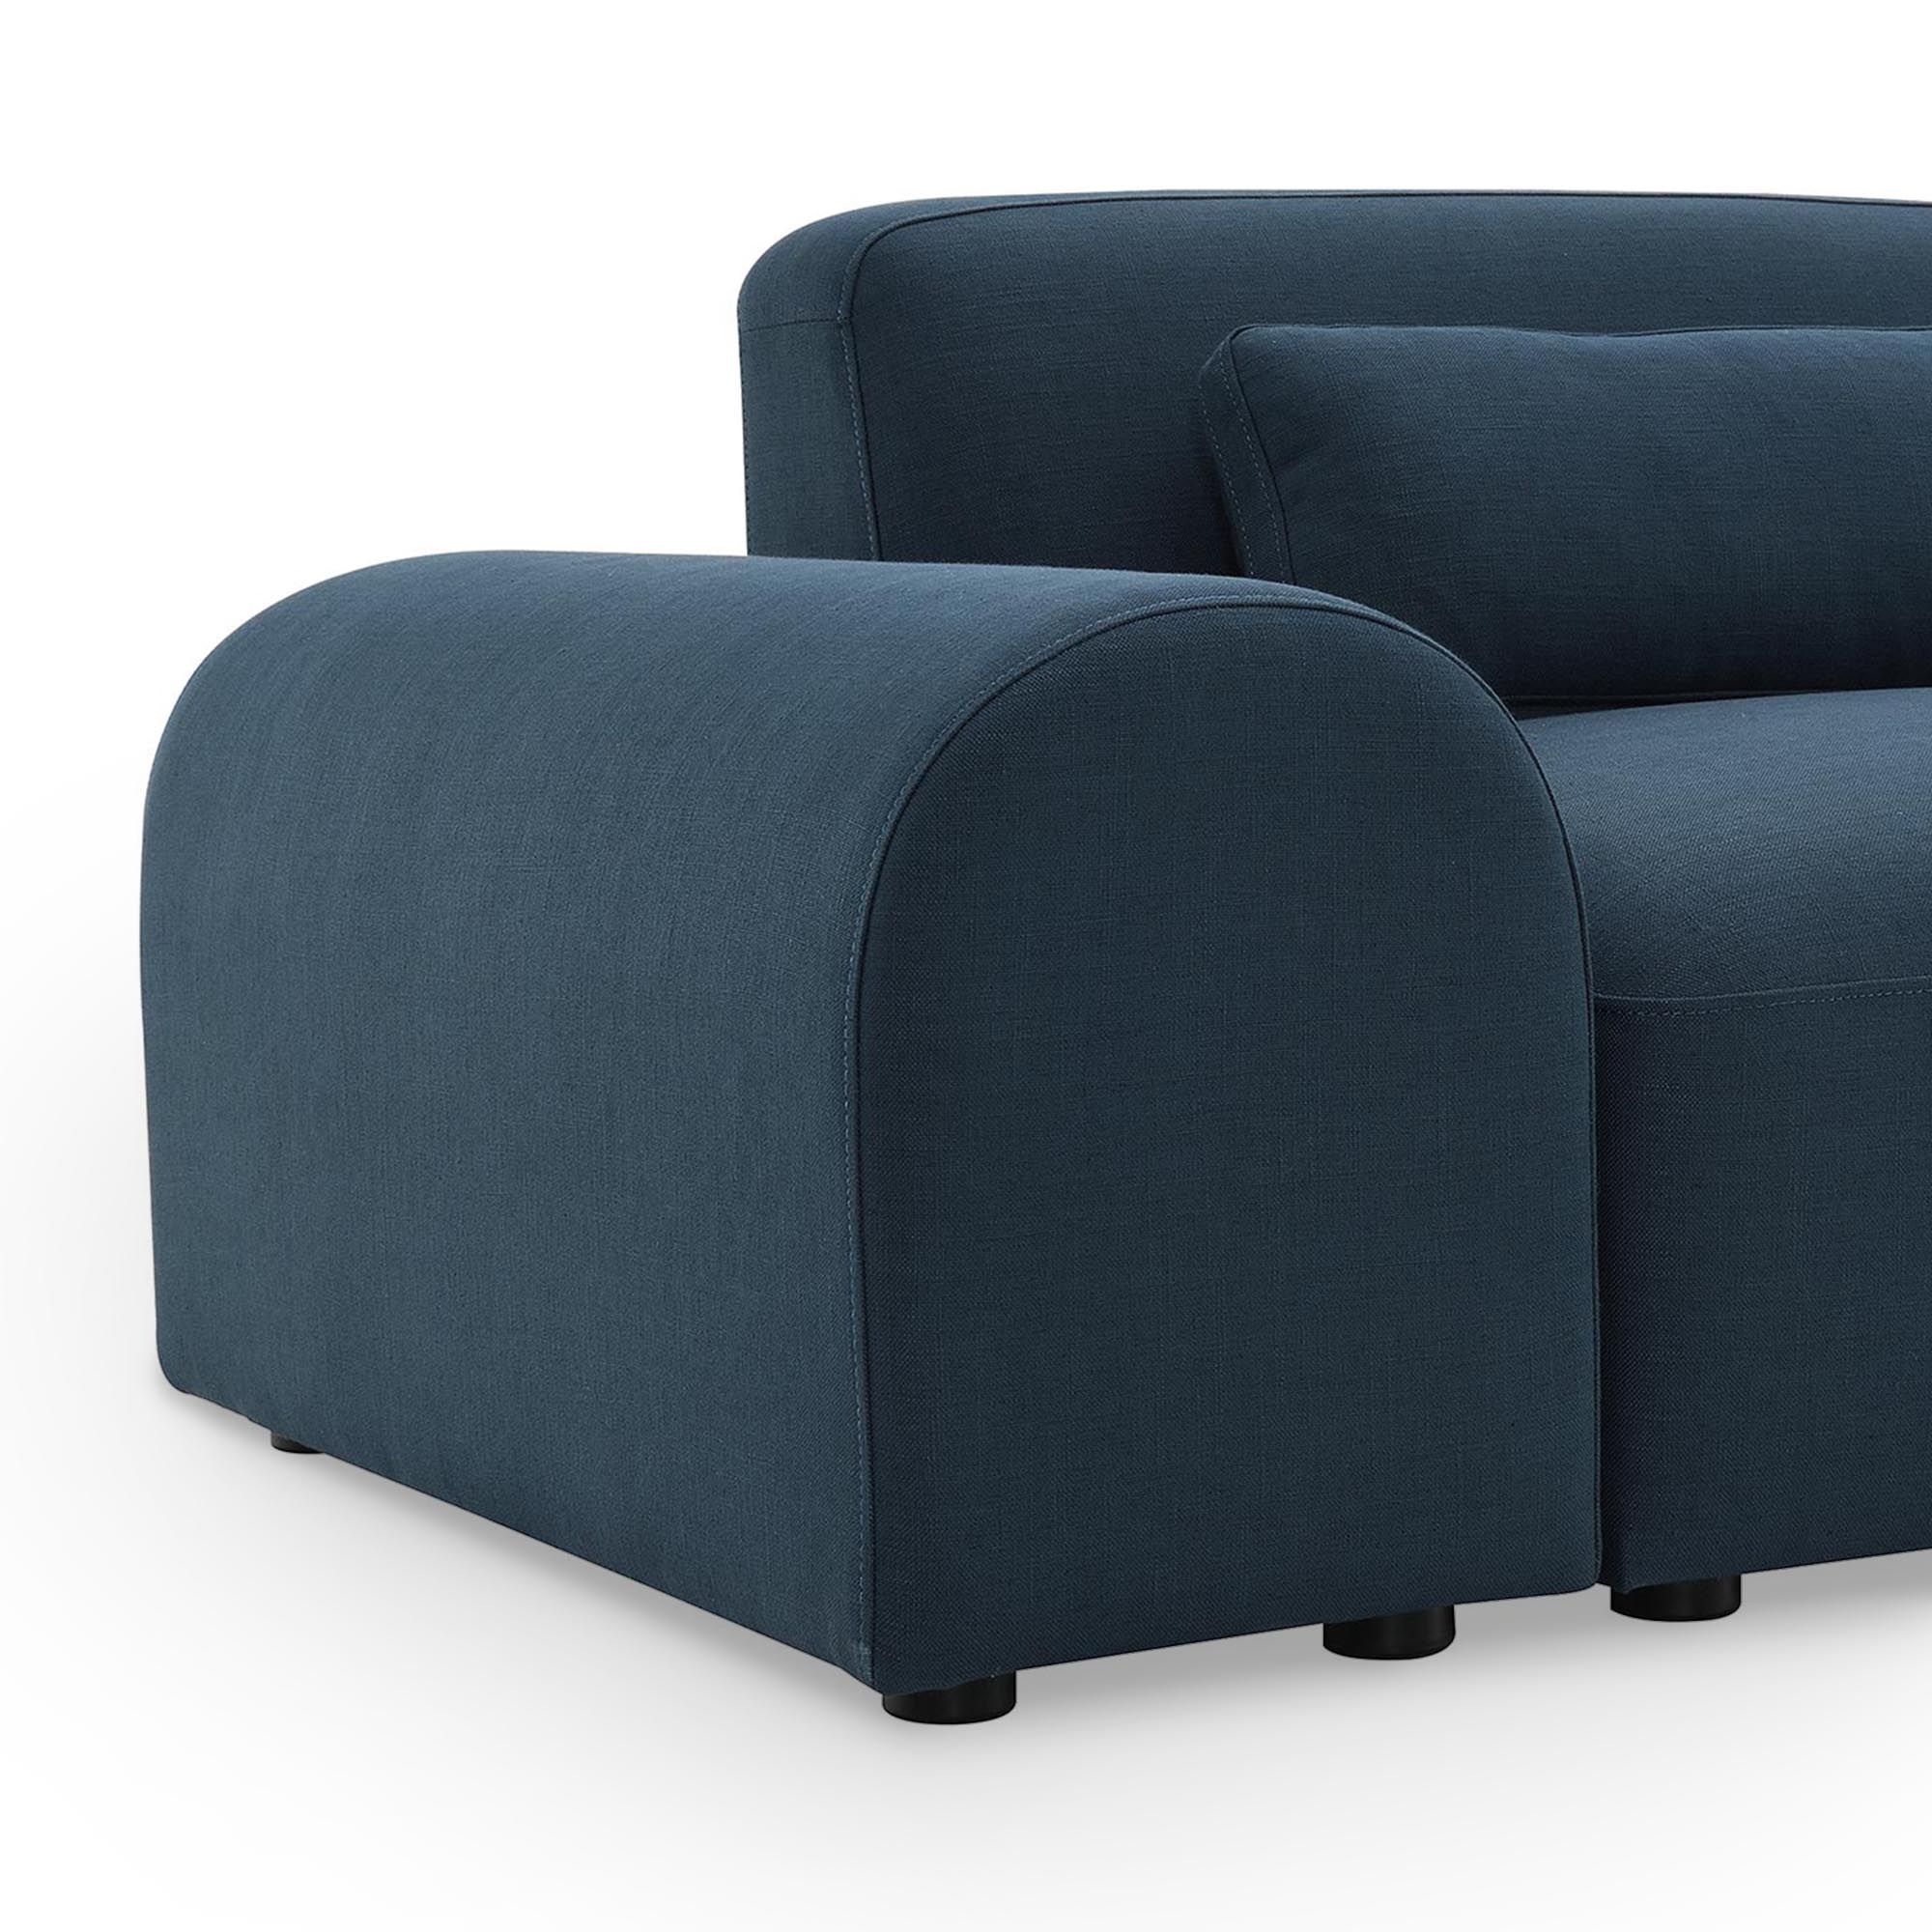 Canapé contemporain d'angle réversible en tissu bleu